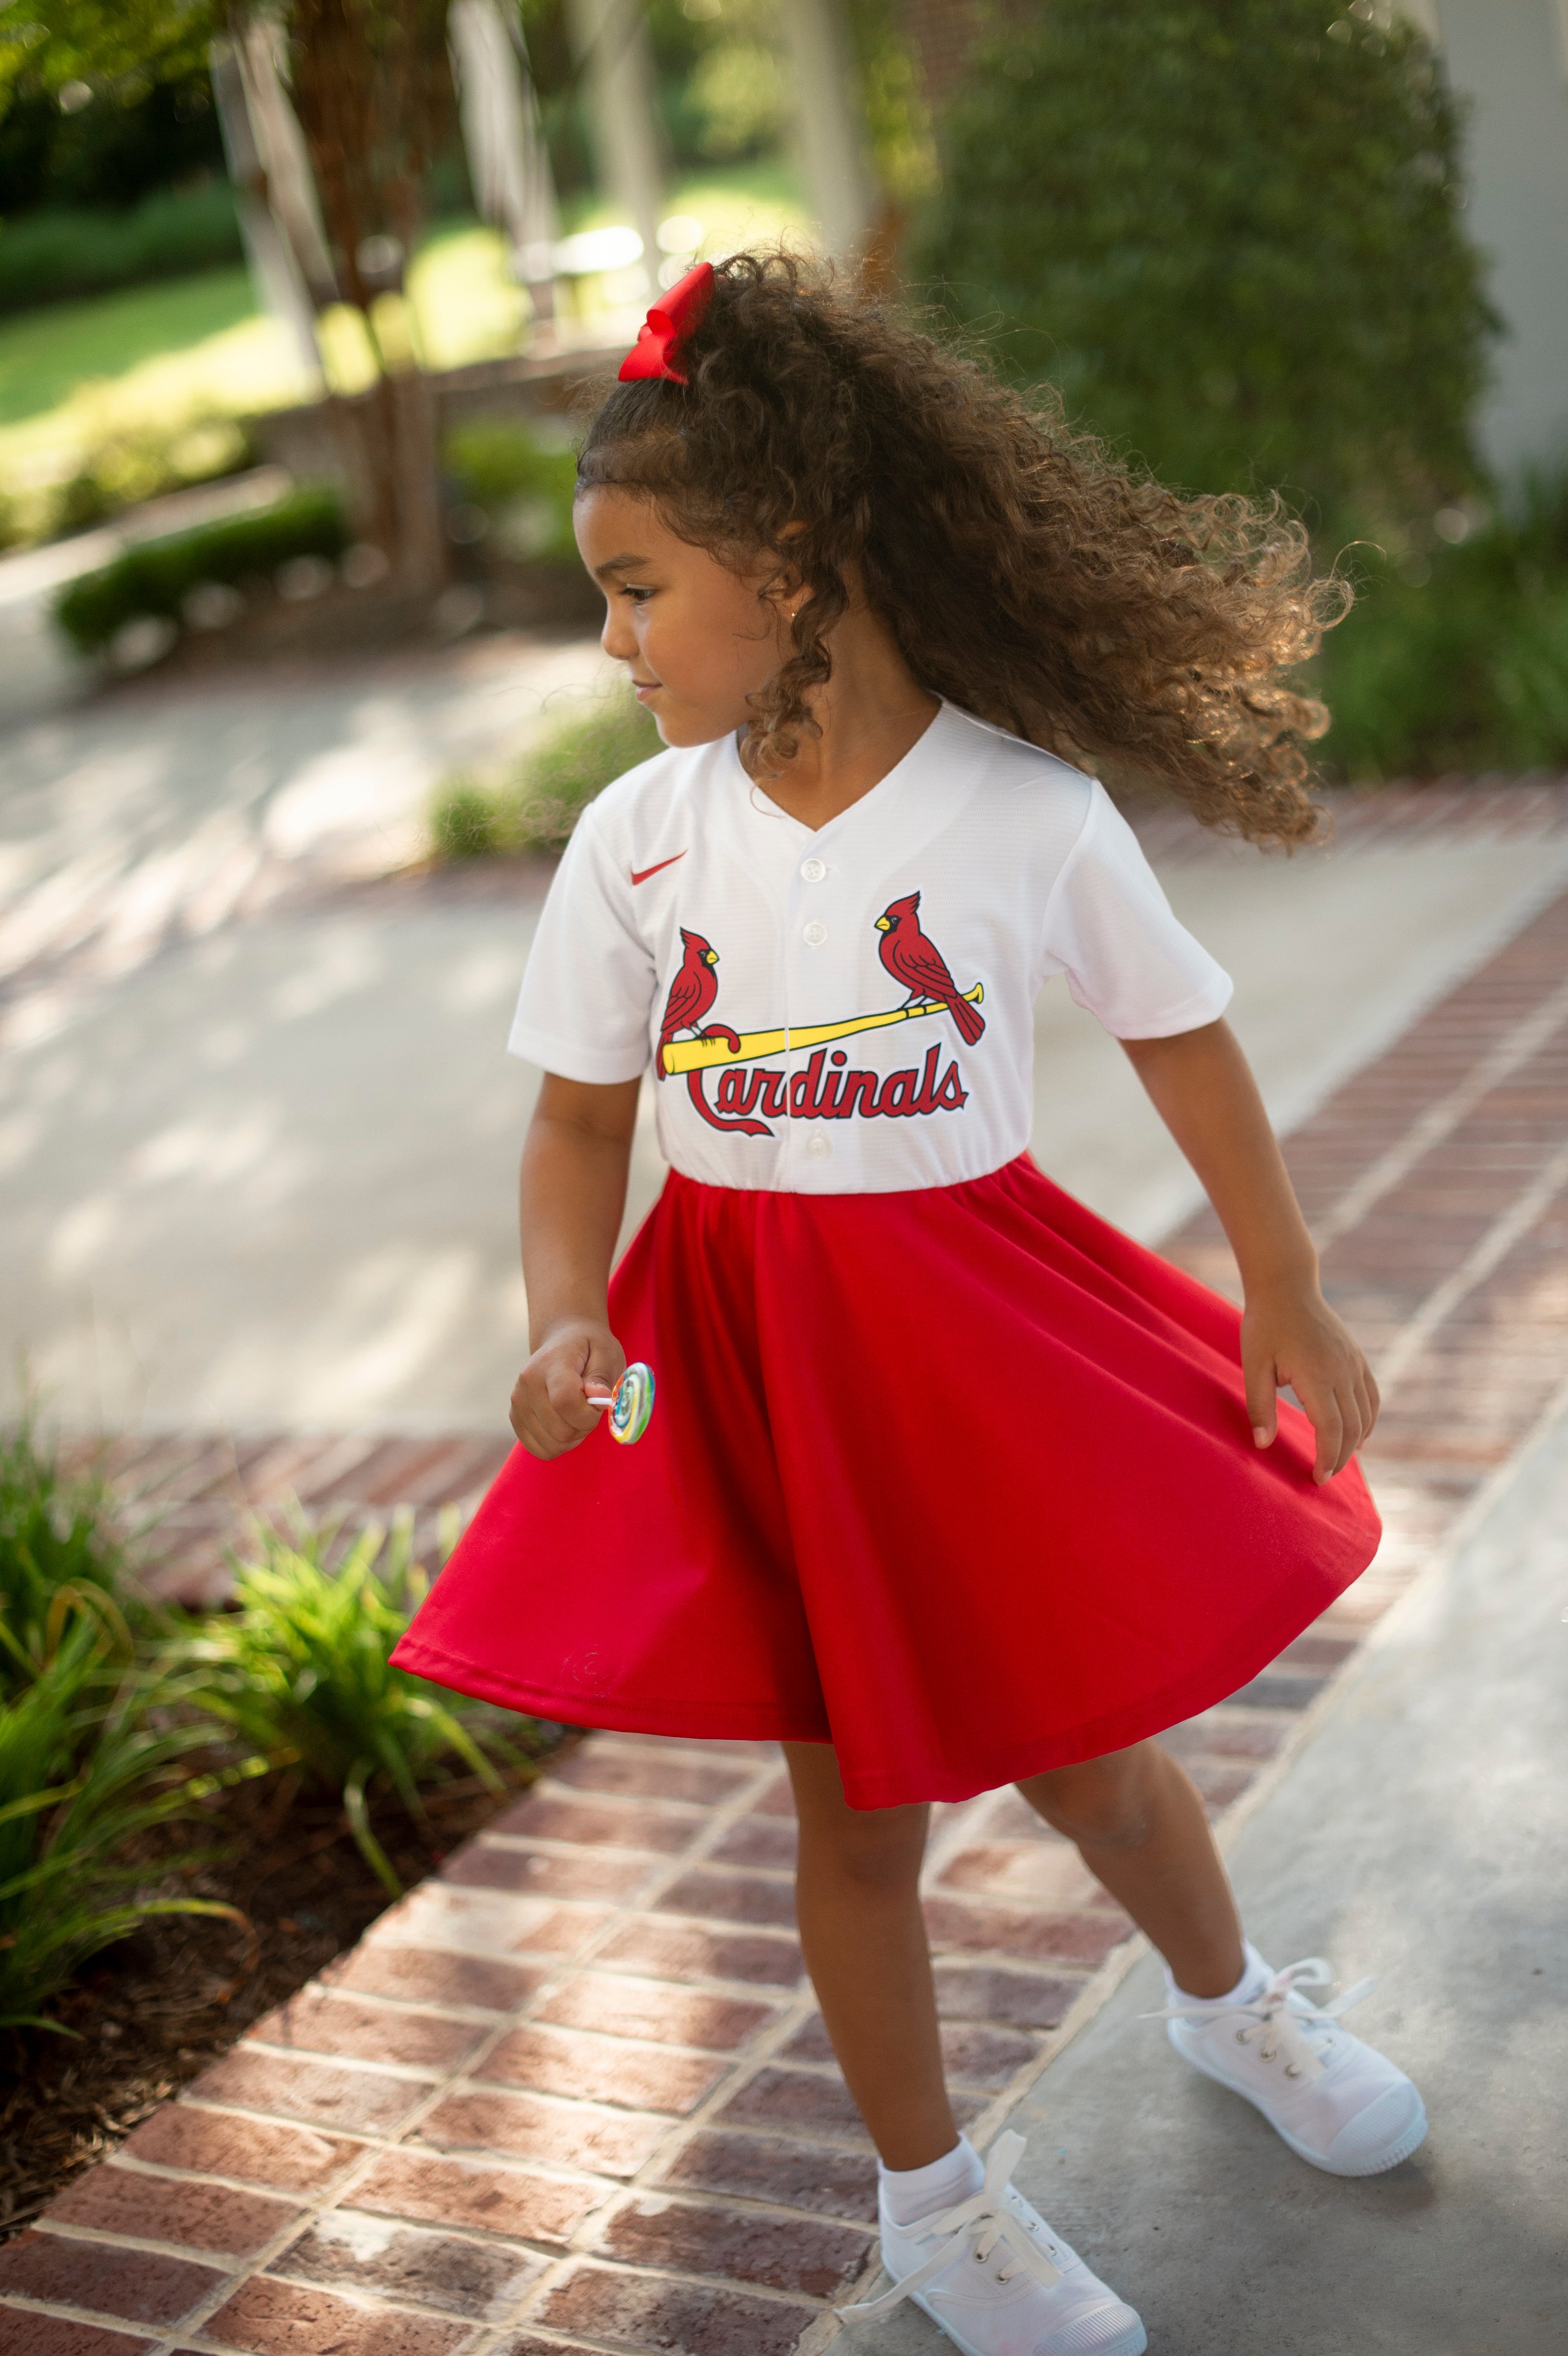 Official Ladies St. Louis Cardinals T-Shirts, Ladies Cardinals